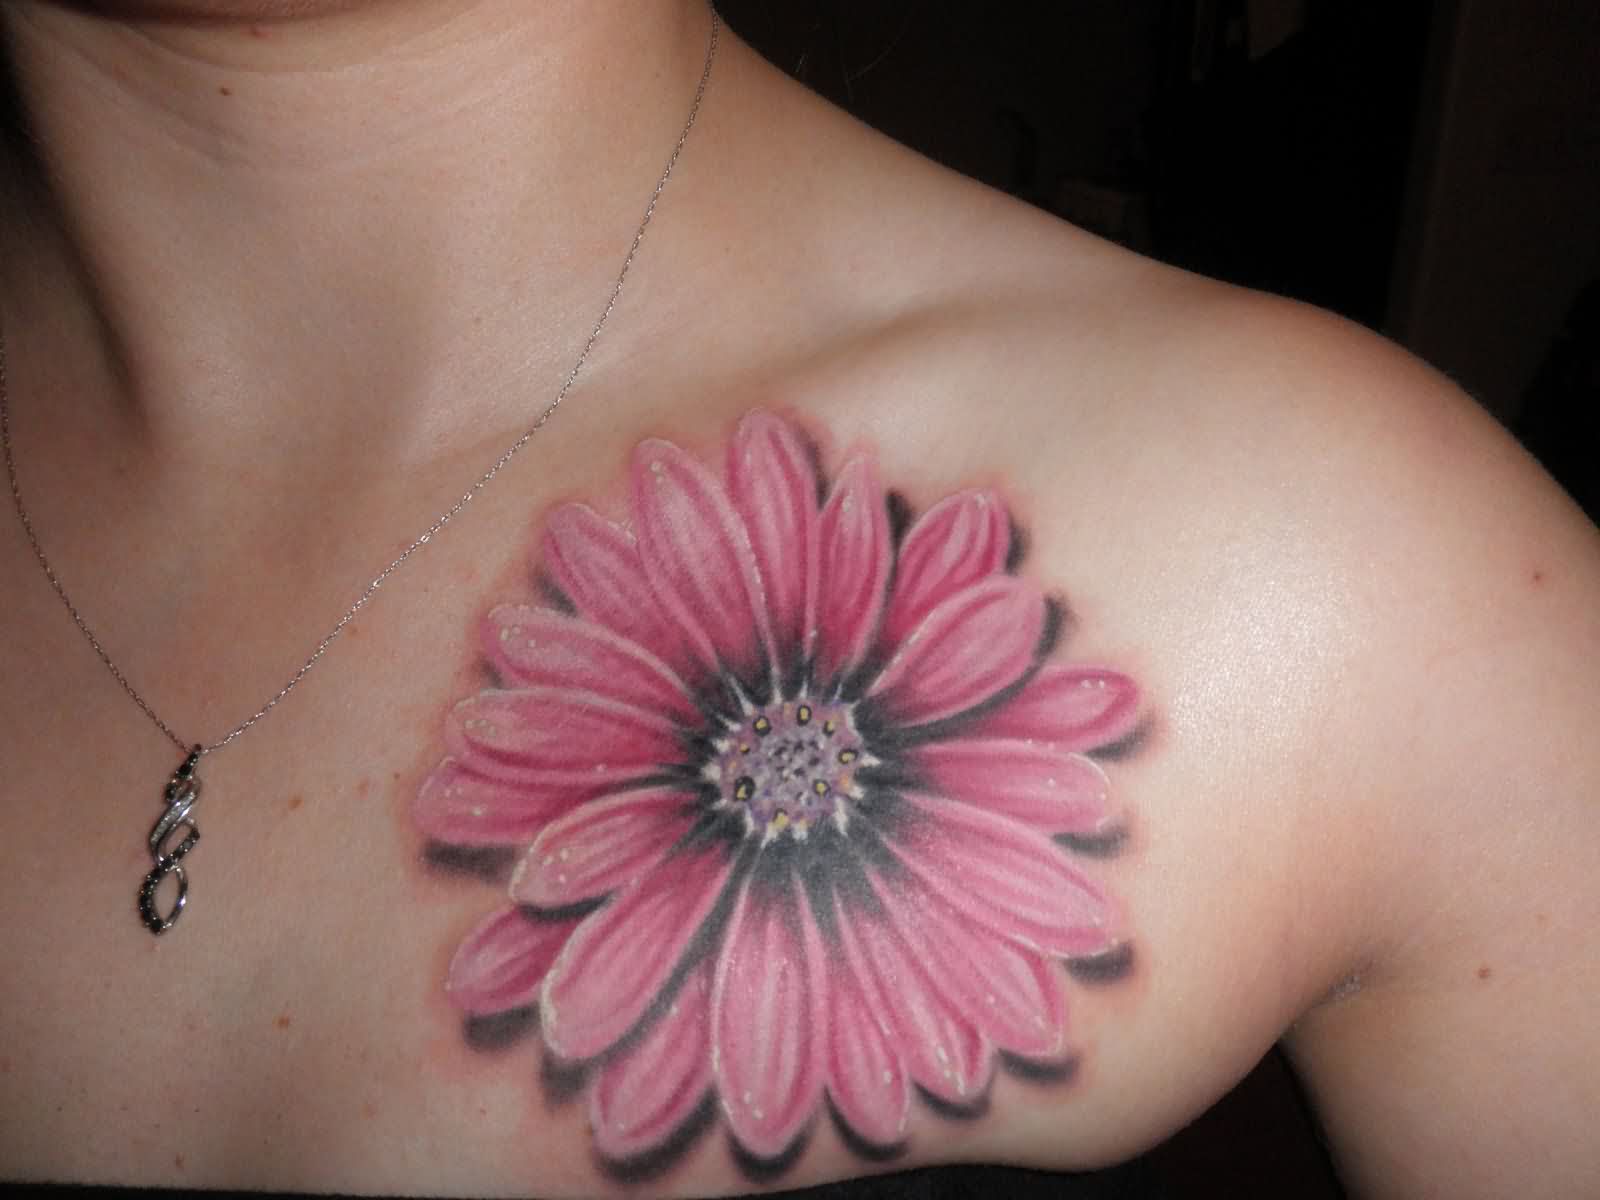  pink sunflower tattoo